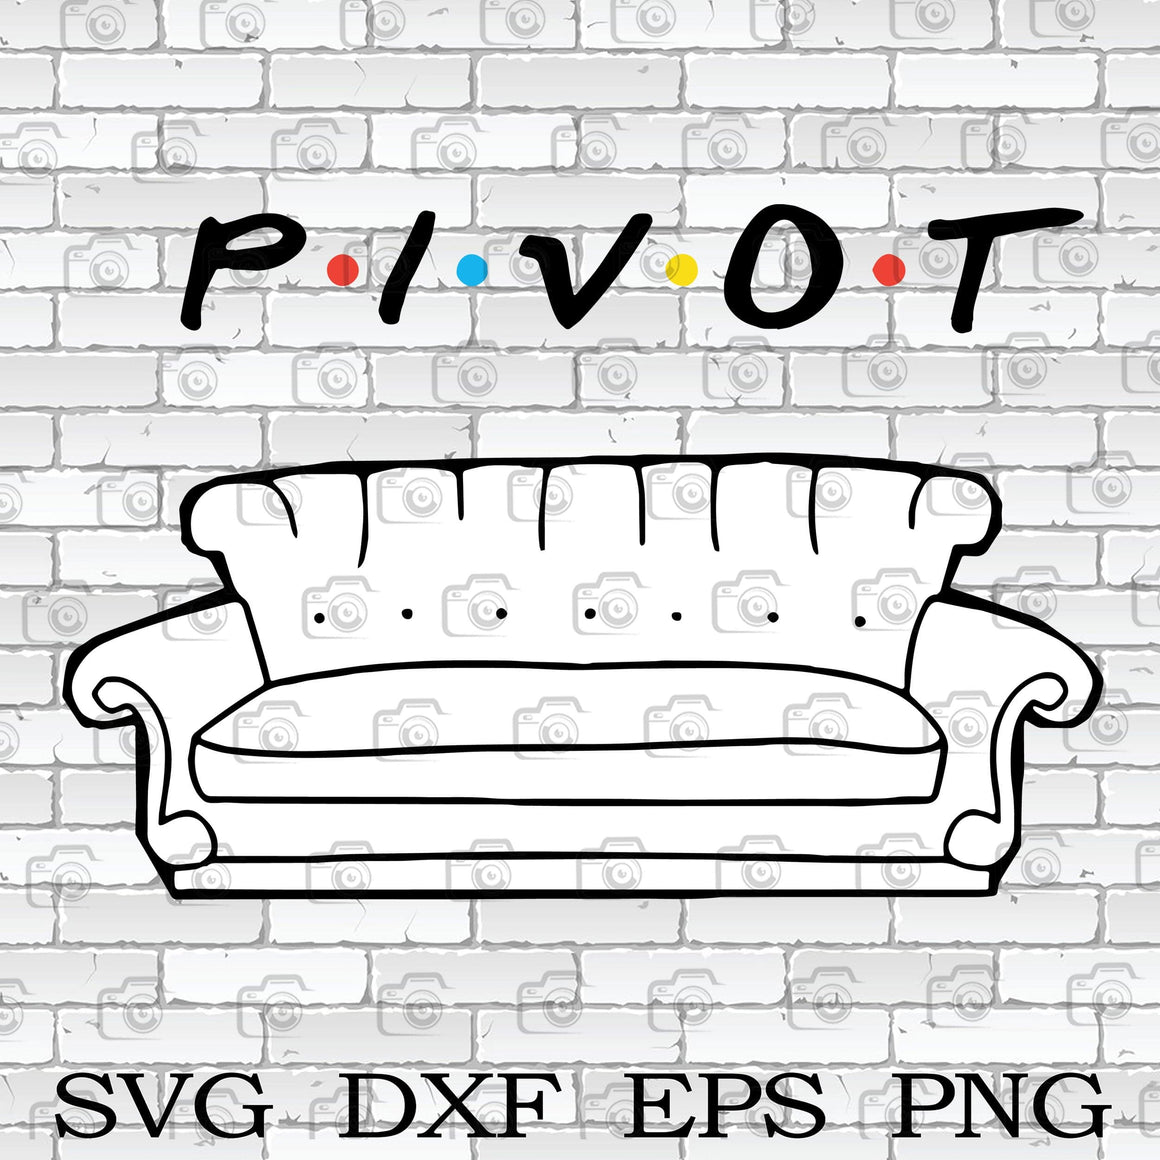 Free Free Friends Pivot Svg Free 71 SVG PNG EPS DXF File